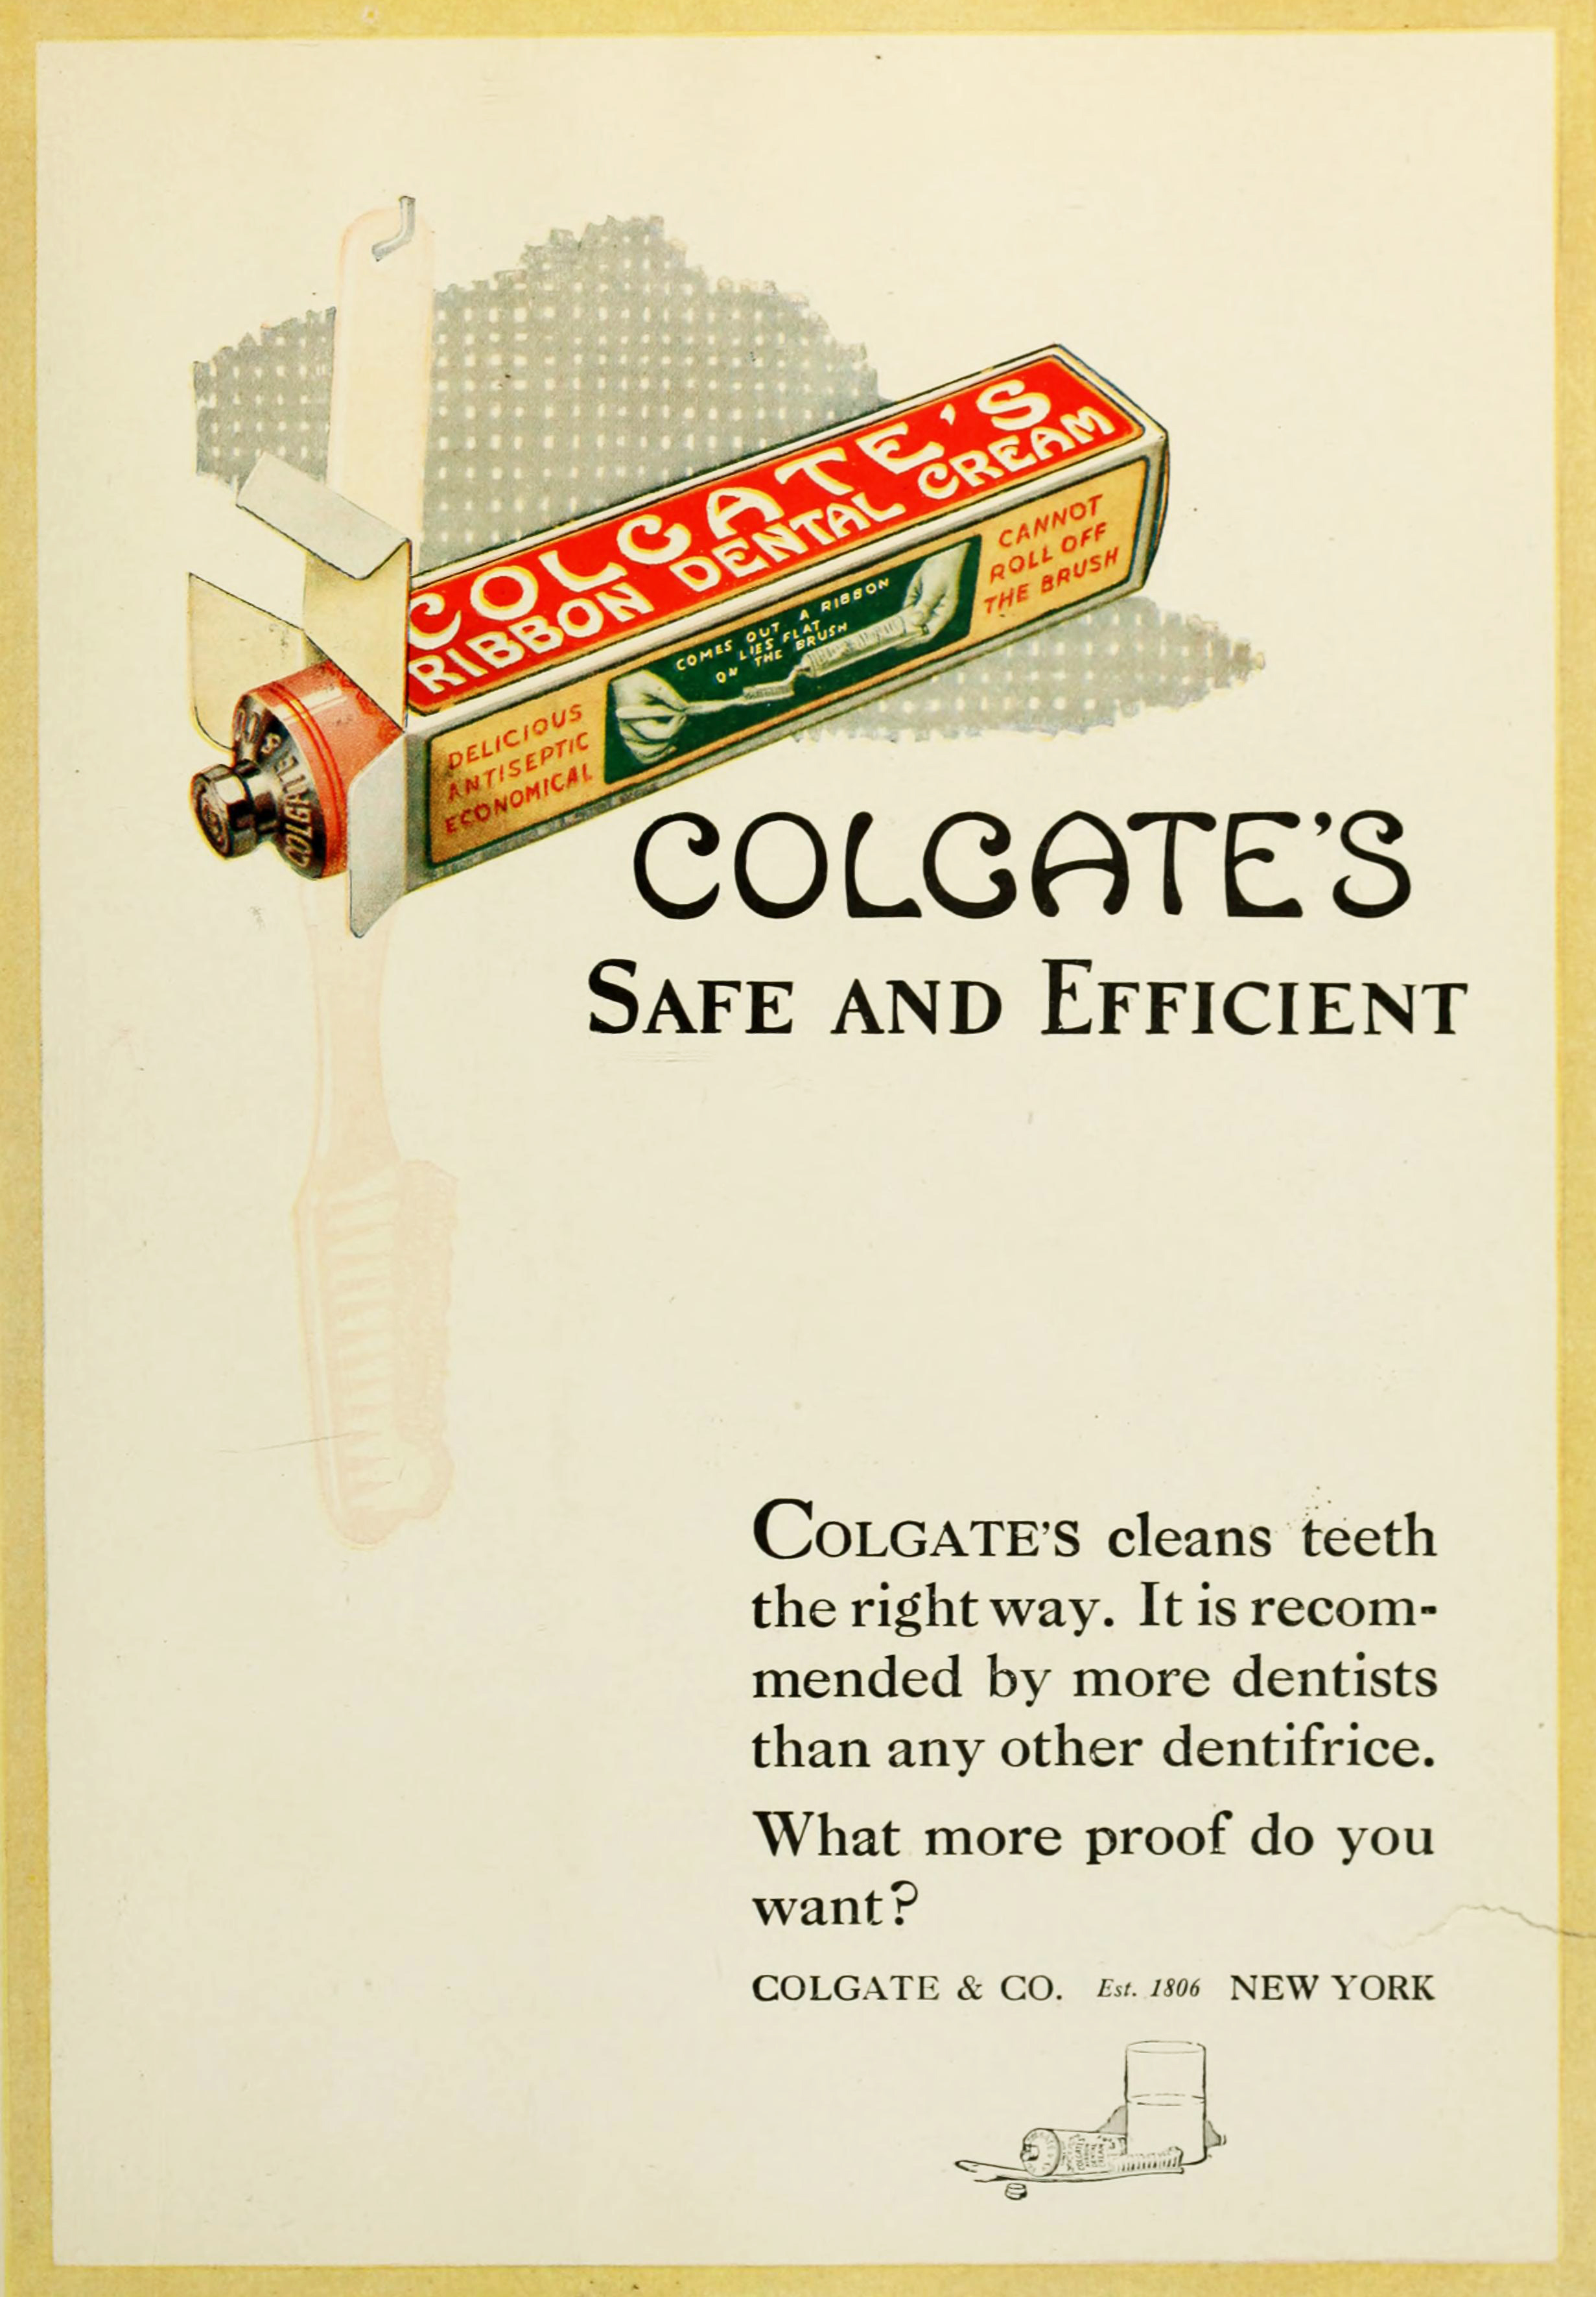 Colgate's Ribbon Dental Cream Toothpaste Ad Circa 1922